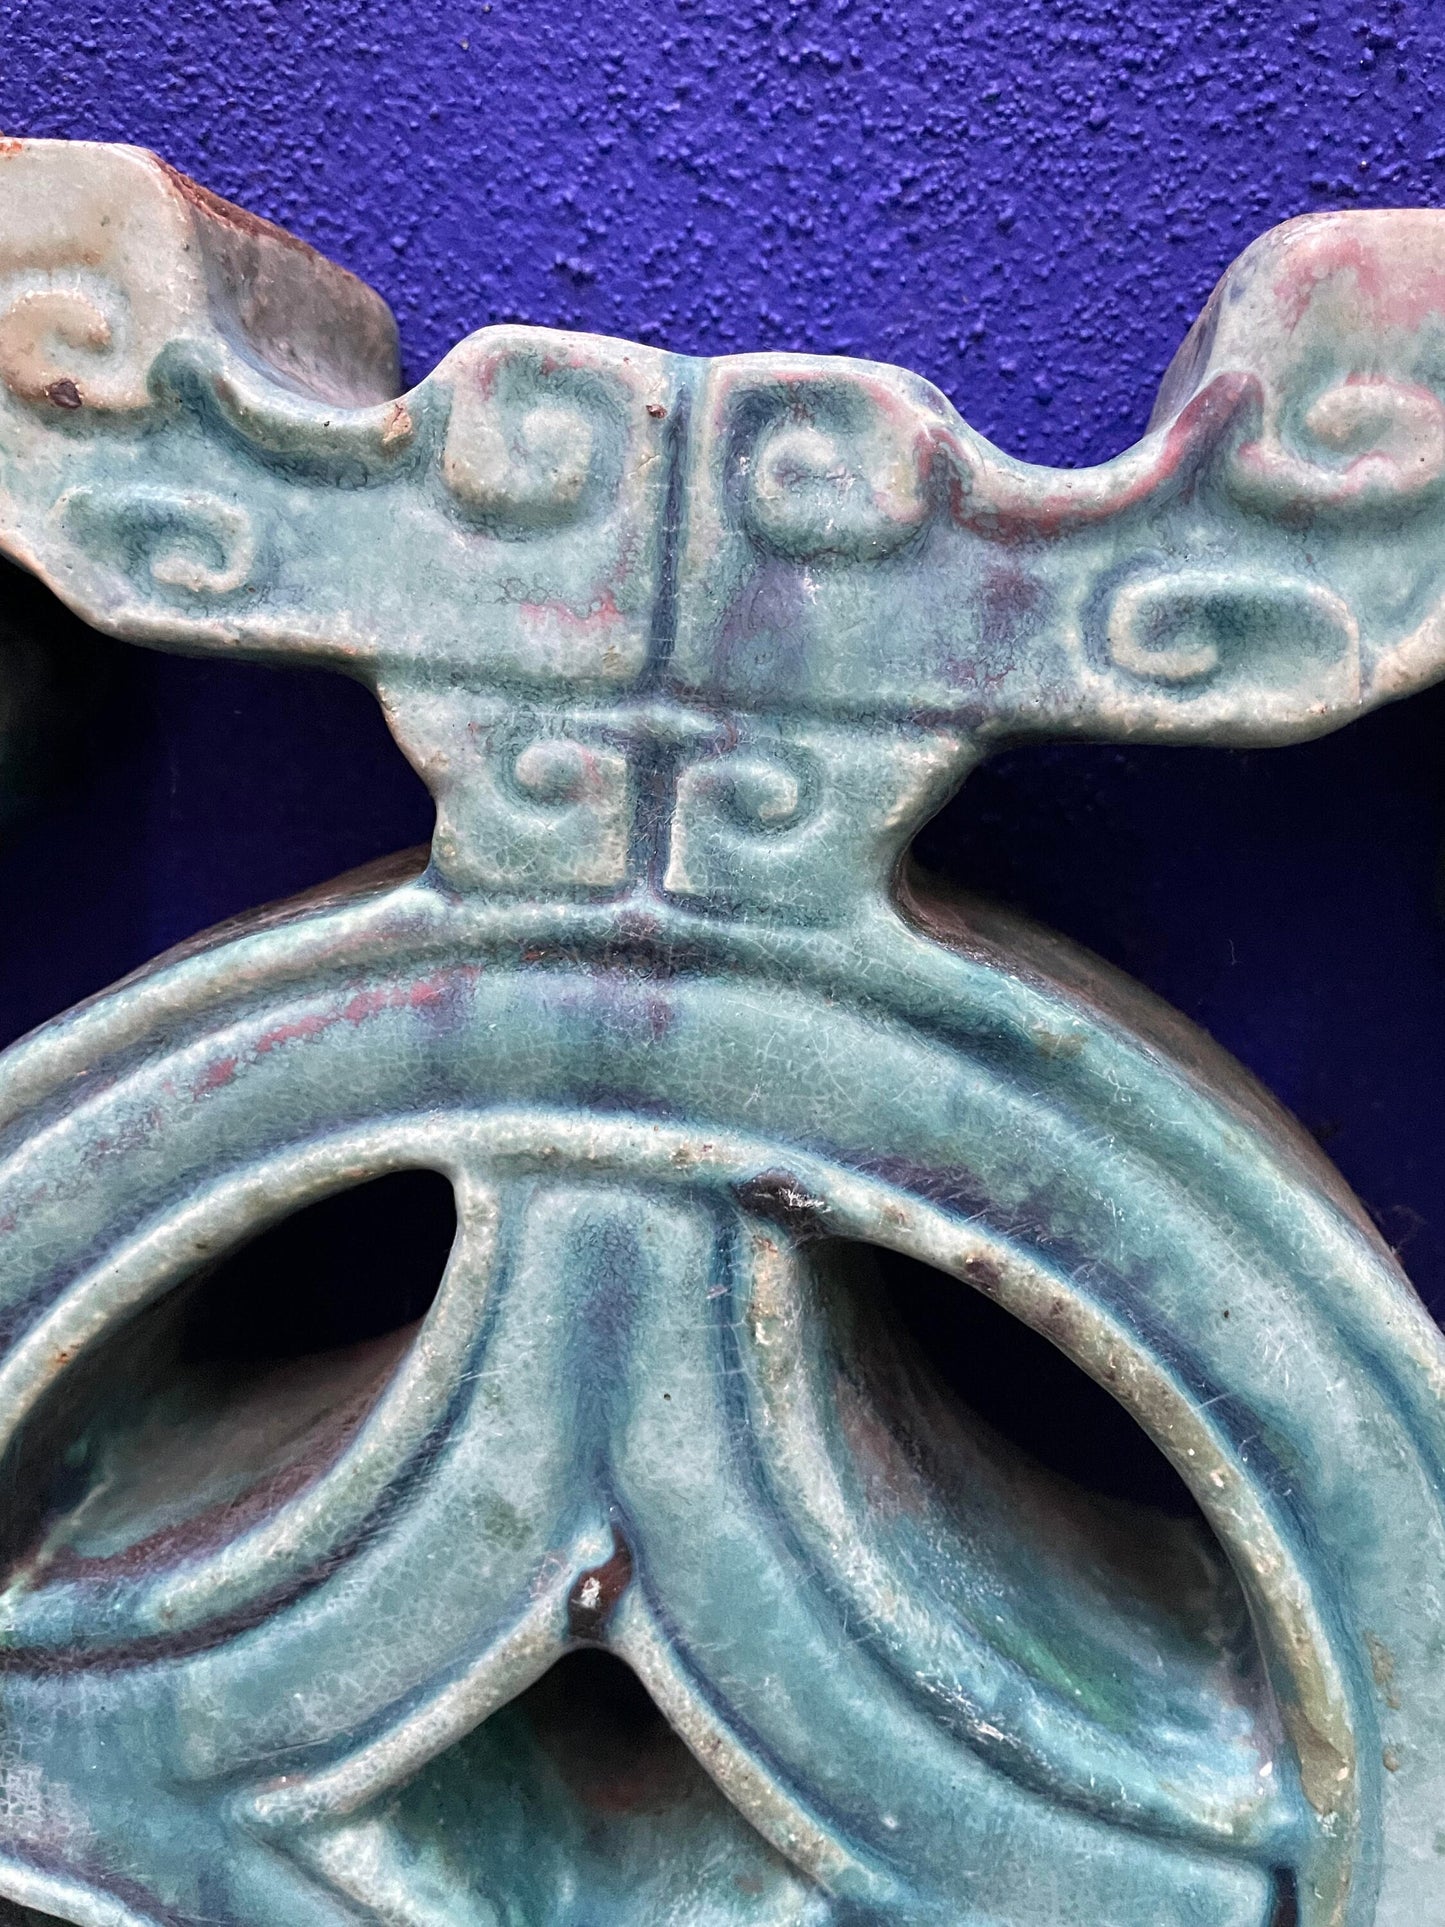 Antique Chinese Jade Breezeway Tiki Tile Turquoise Archetechute Garden Tile